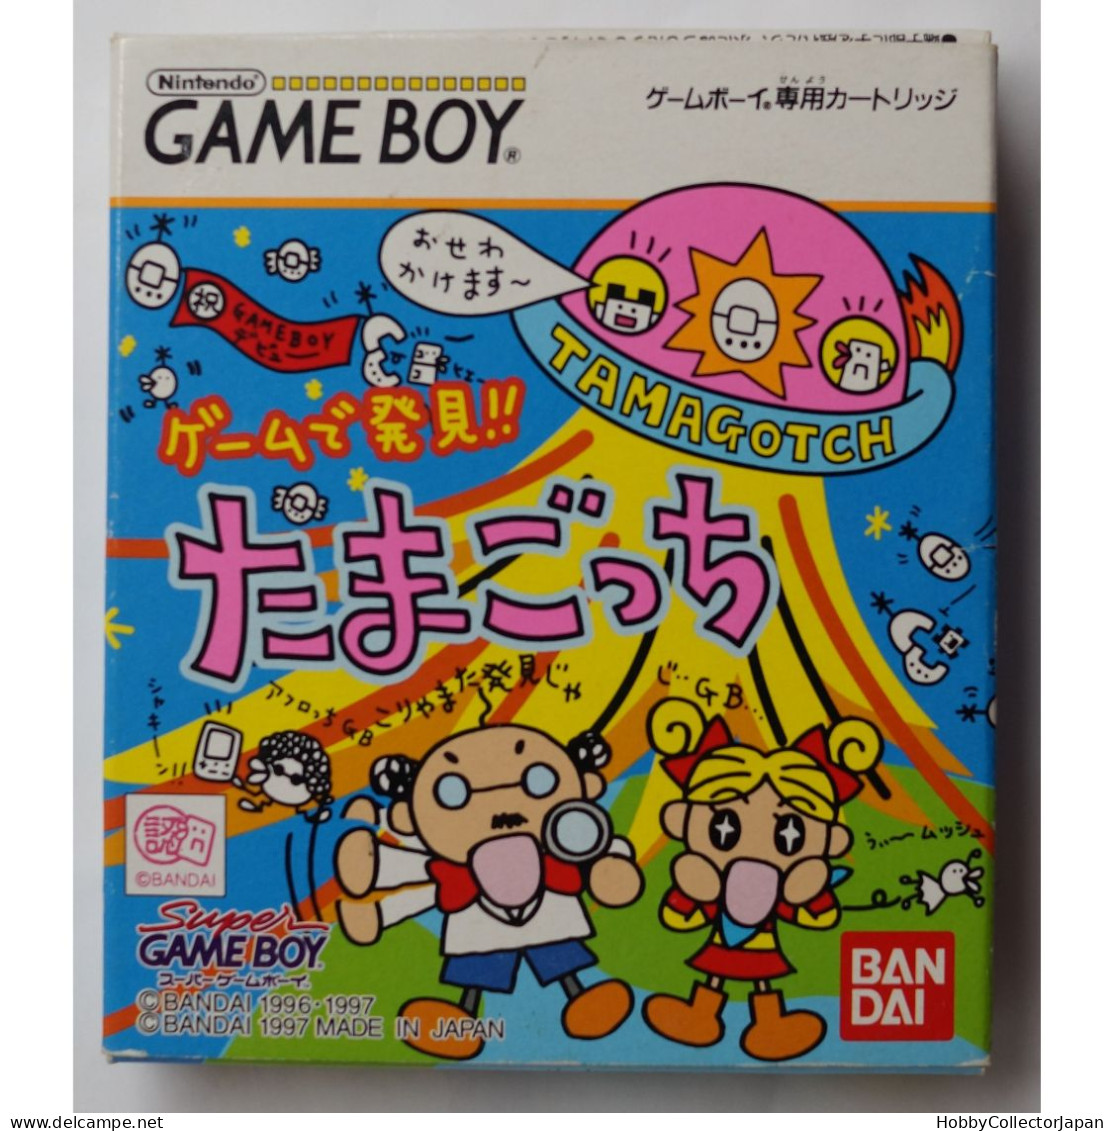 Game De Hakken!! Tamagotchi DMG-P-ATAJ(JPN) Game Boy 4902425572376 - Nintendo Game Boy